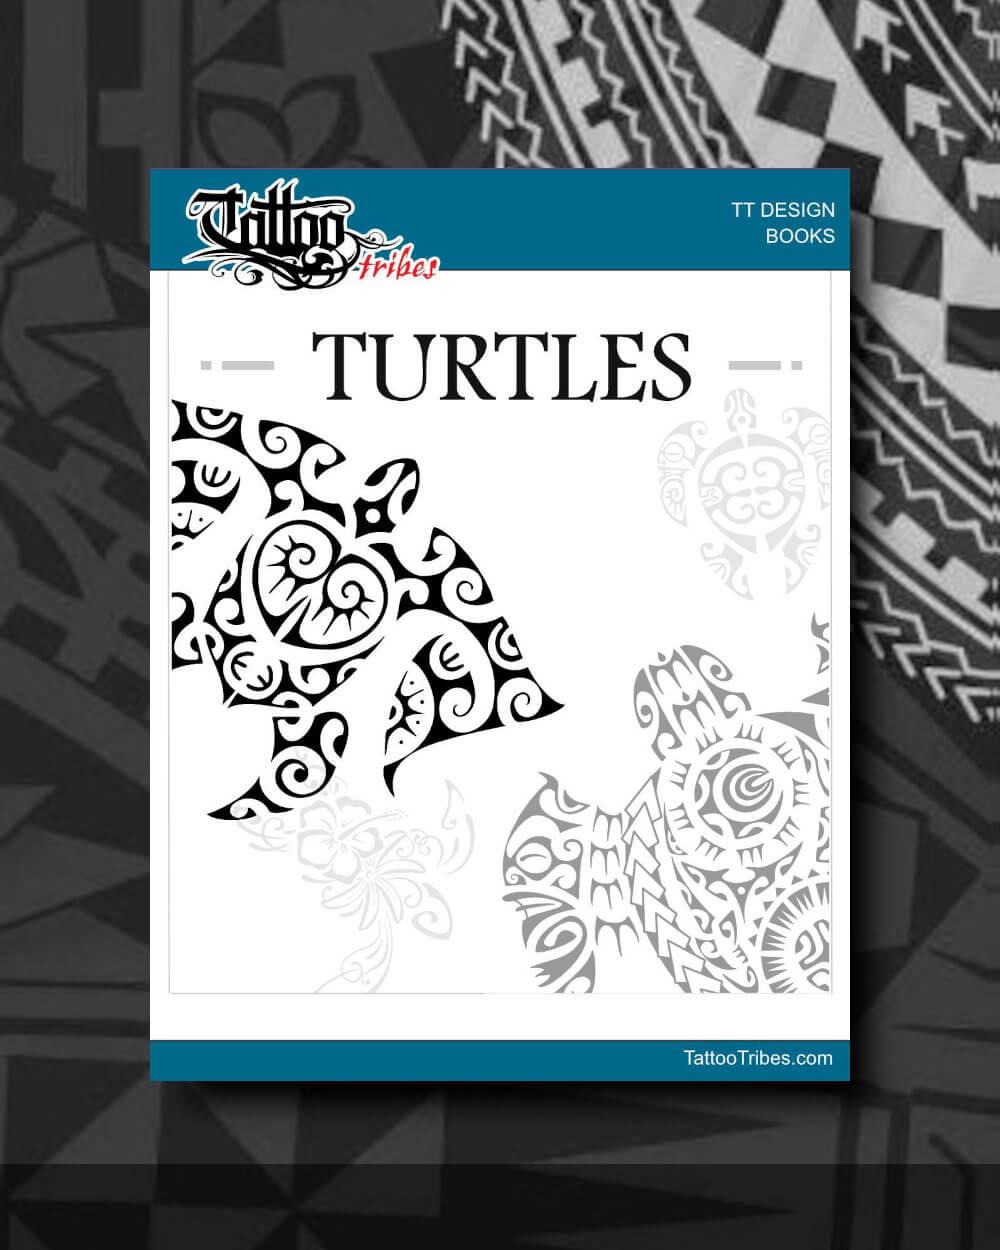 Polynesian Tattoos Design book: Turtles tattoos